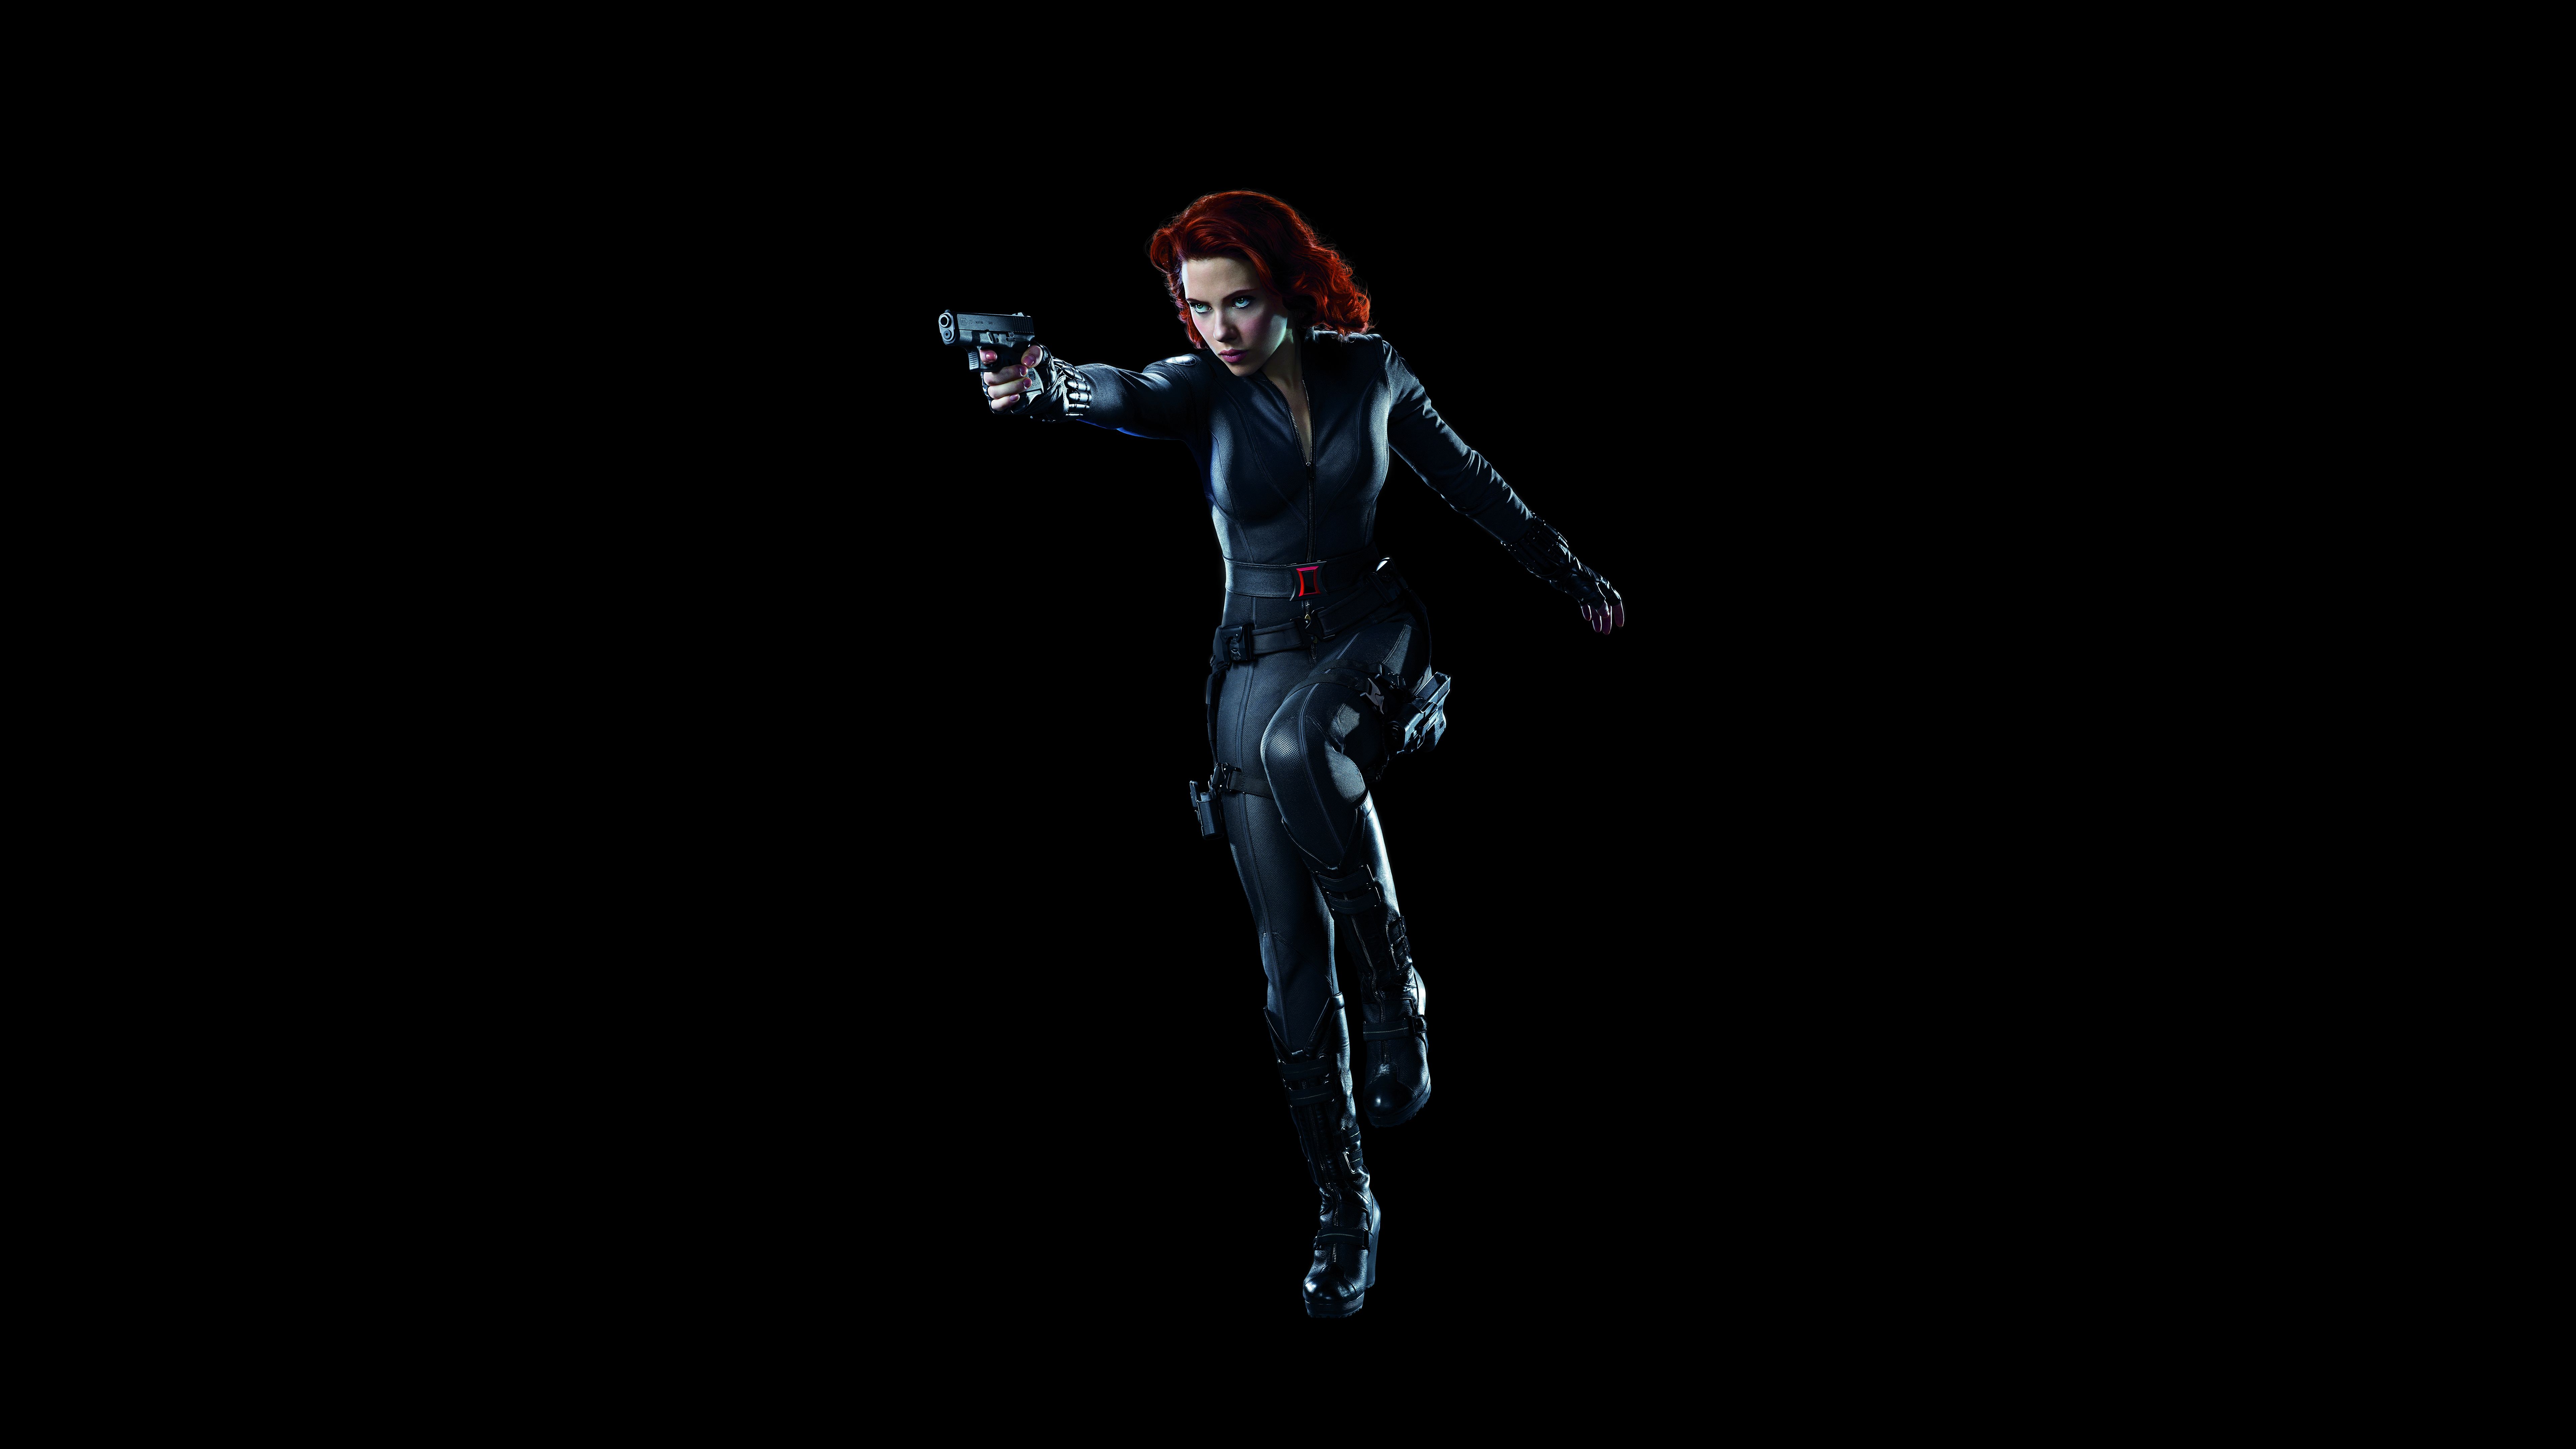 Black Widow 4K Wallpaper, Scarlett Johansson, Black background, 5K, 8K, Movies